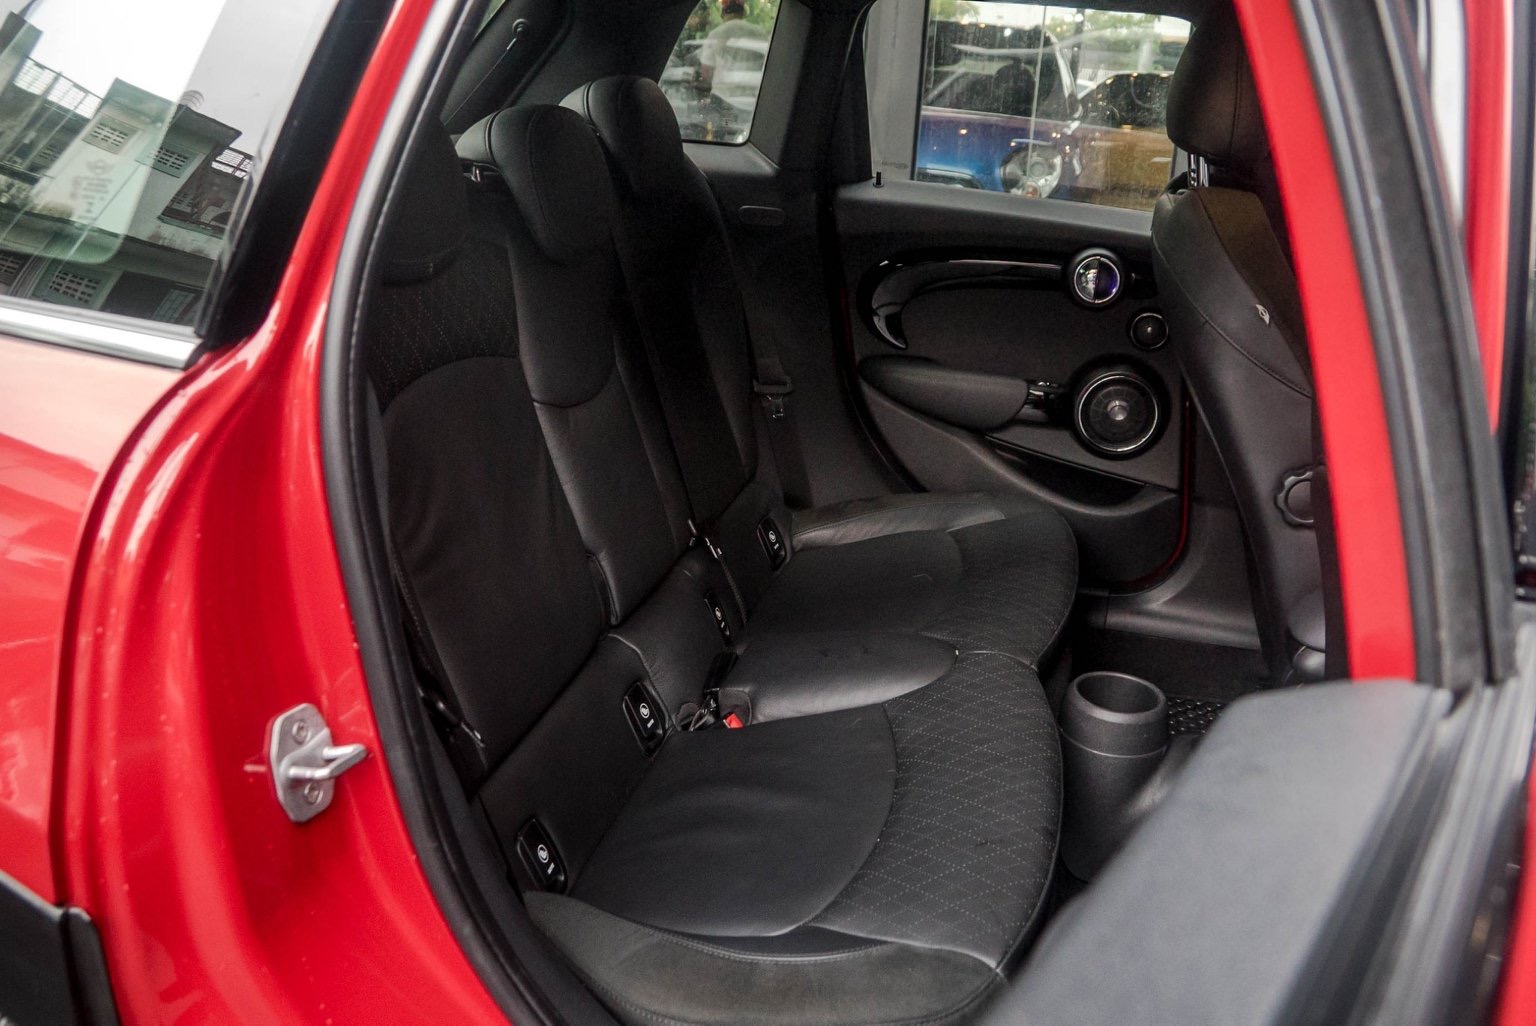 Mini Hatch (Cooper) Gen3 F55 (5 ประตู) ปี 2015 สีแดง